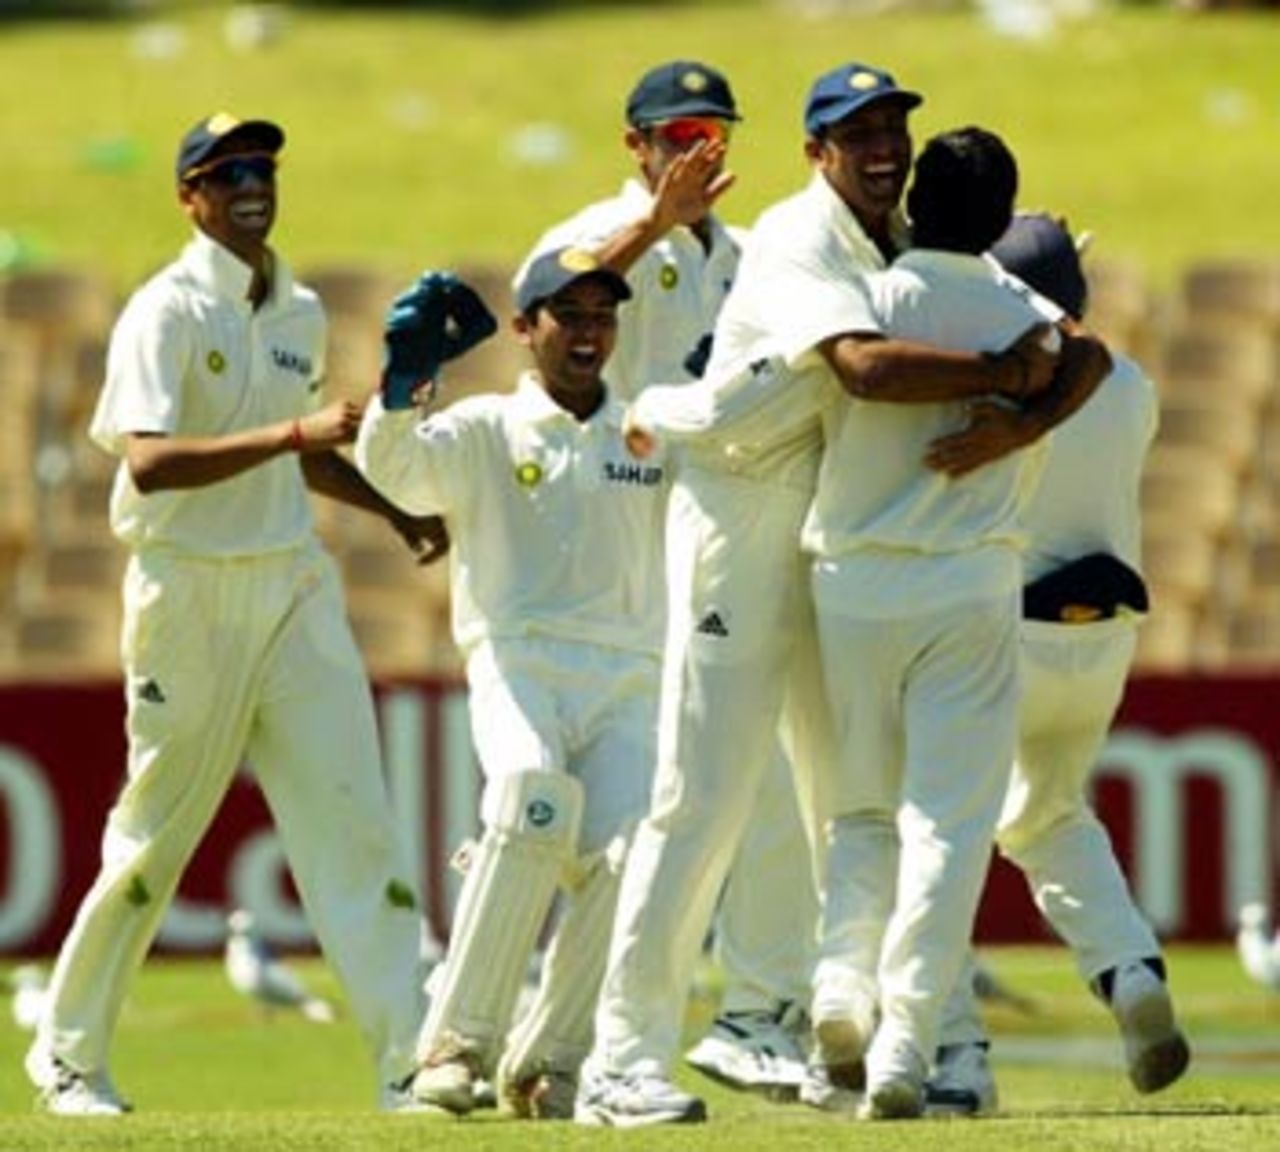 Tendulkar's bowling sent the Indians into raptures of joy, Australia v India, 2nd Test, Adelaide, 4th day, December 15, 2003